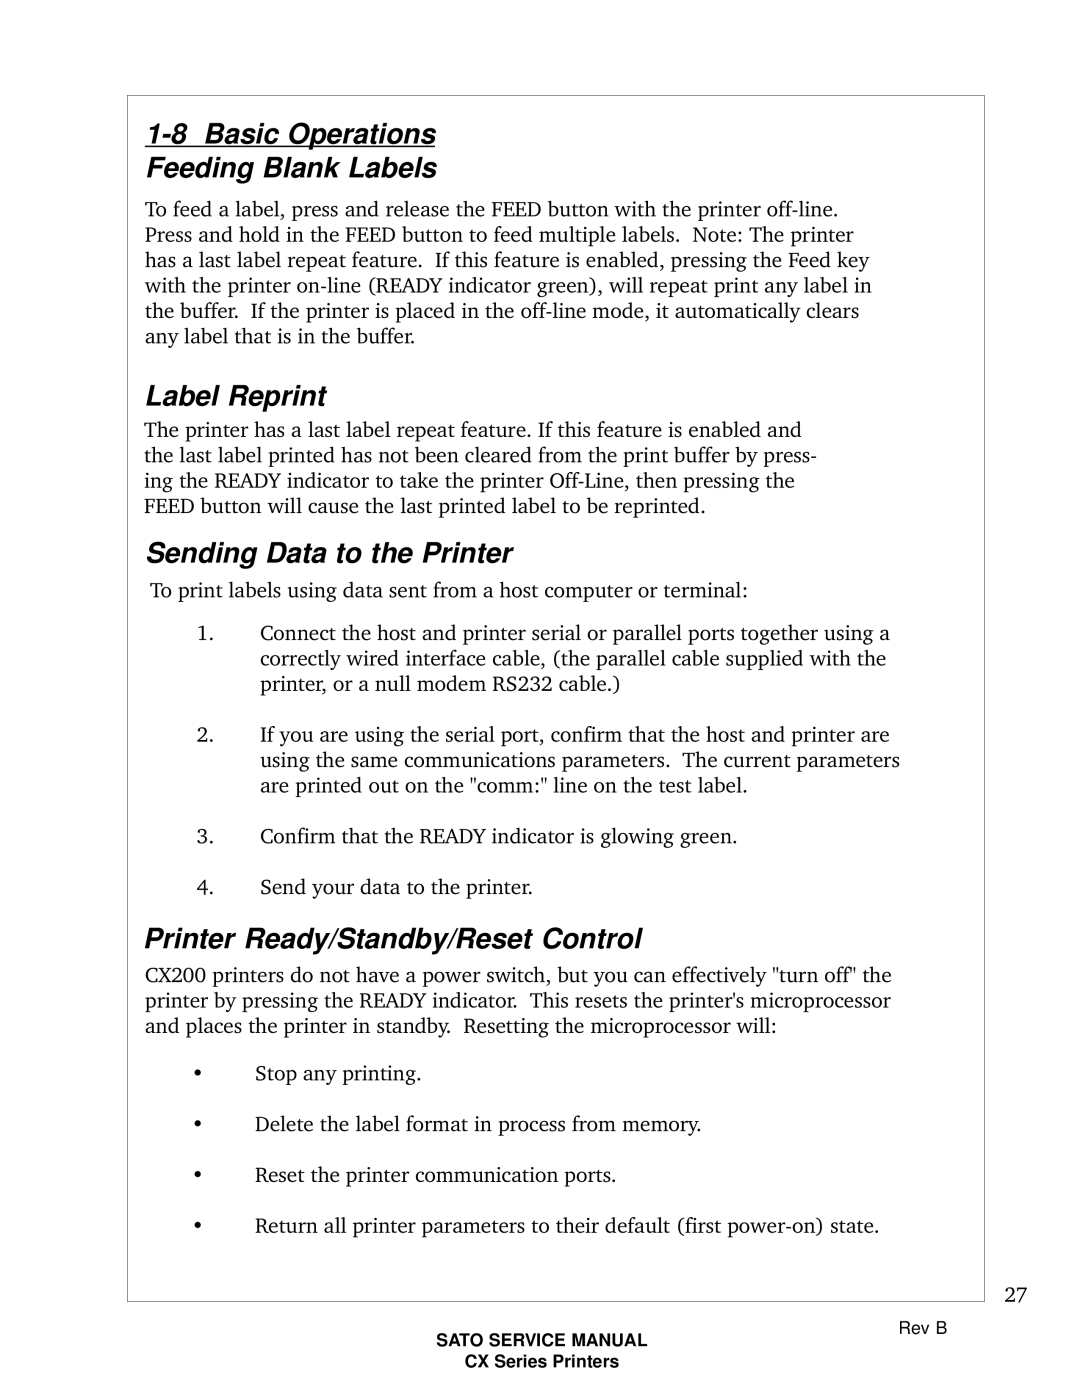 SATO CX200 manual Basic Operations Feeding Blank Labels, Label Reprint, Sending Data to the Printer 